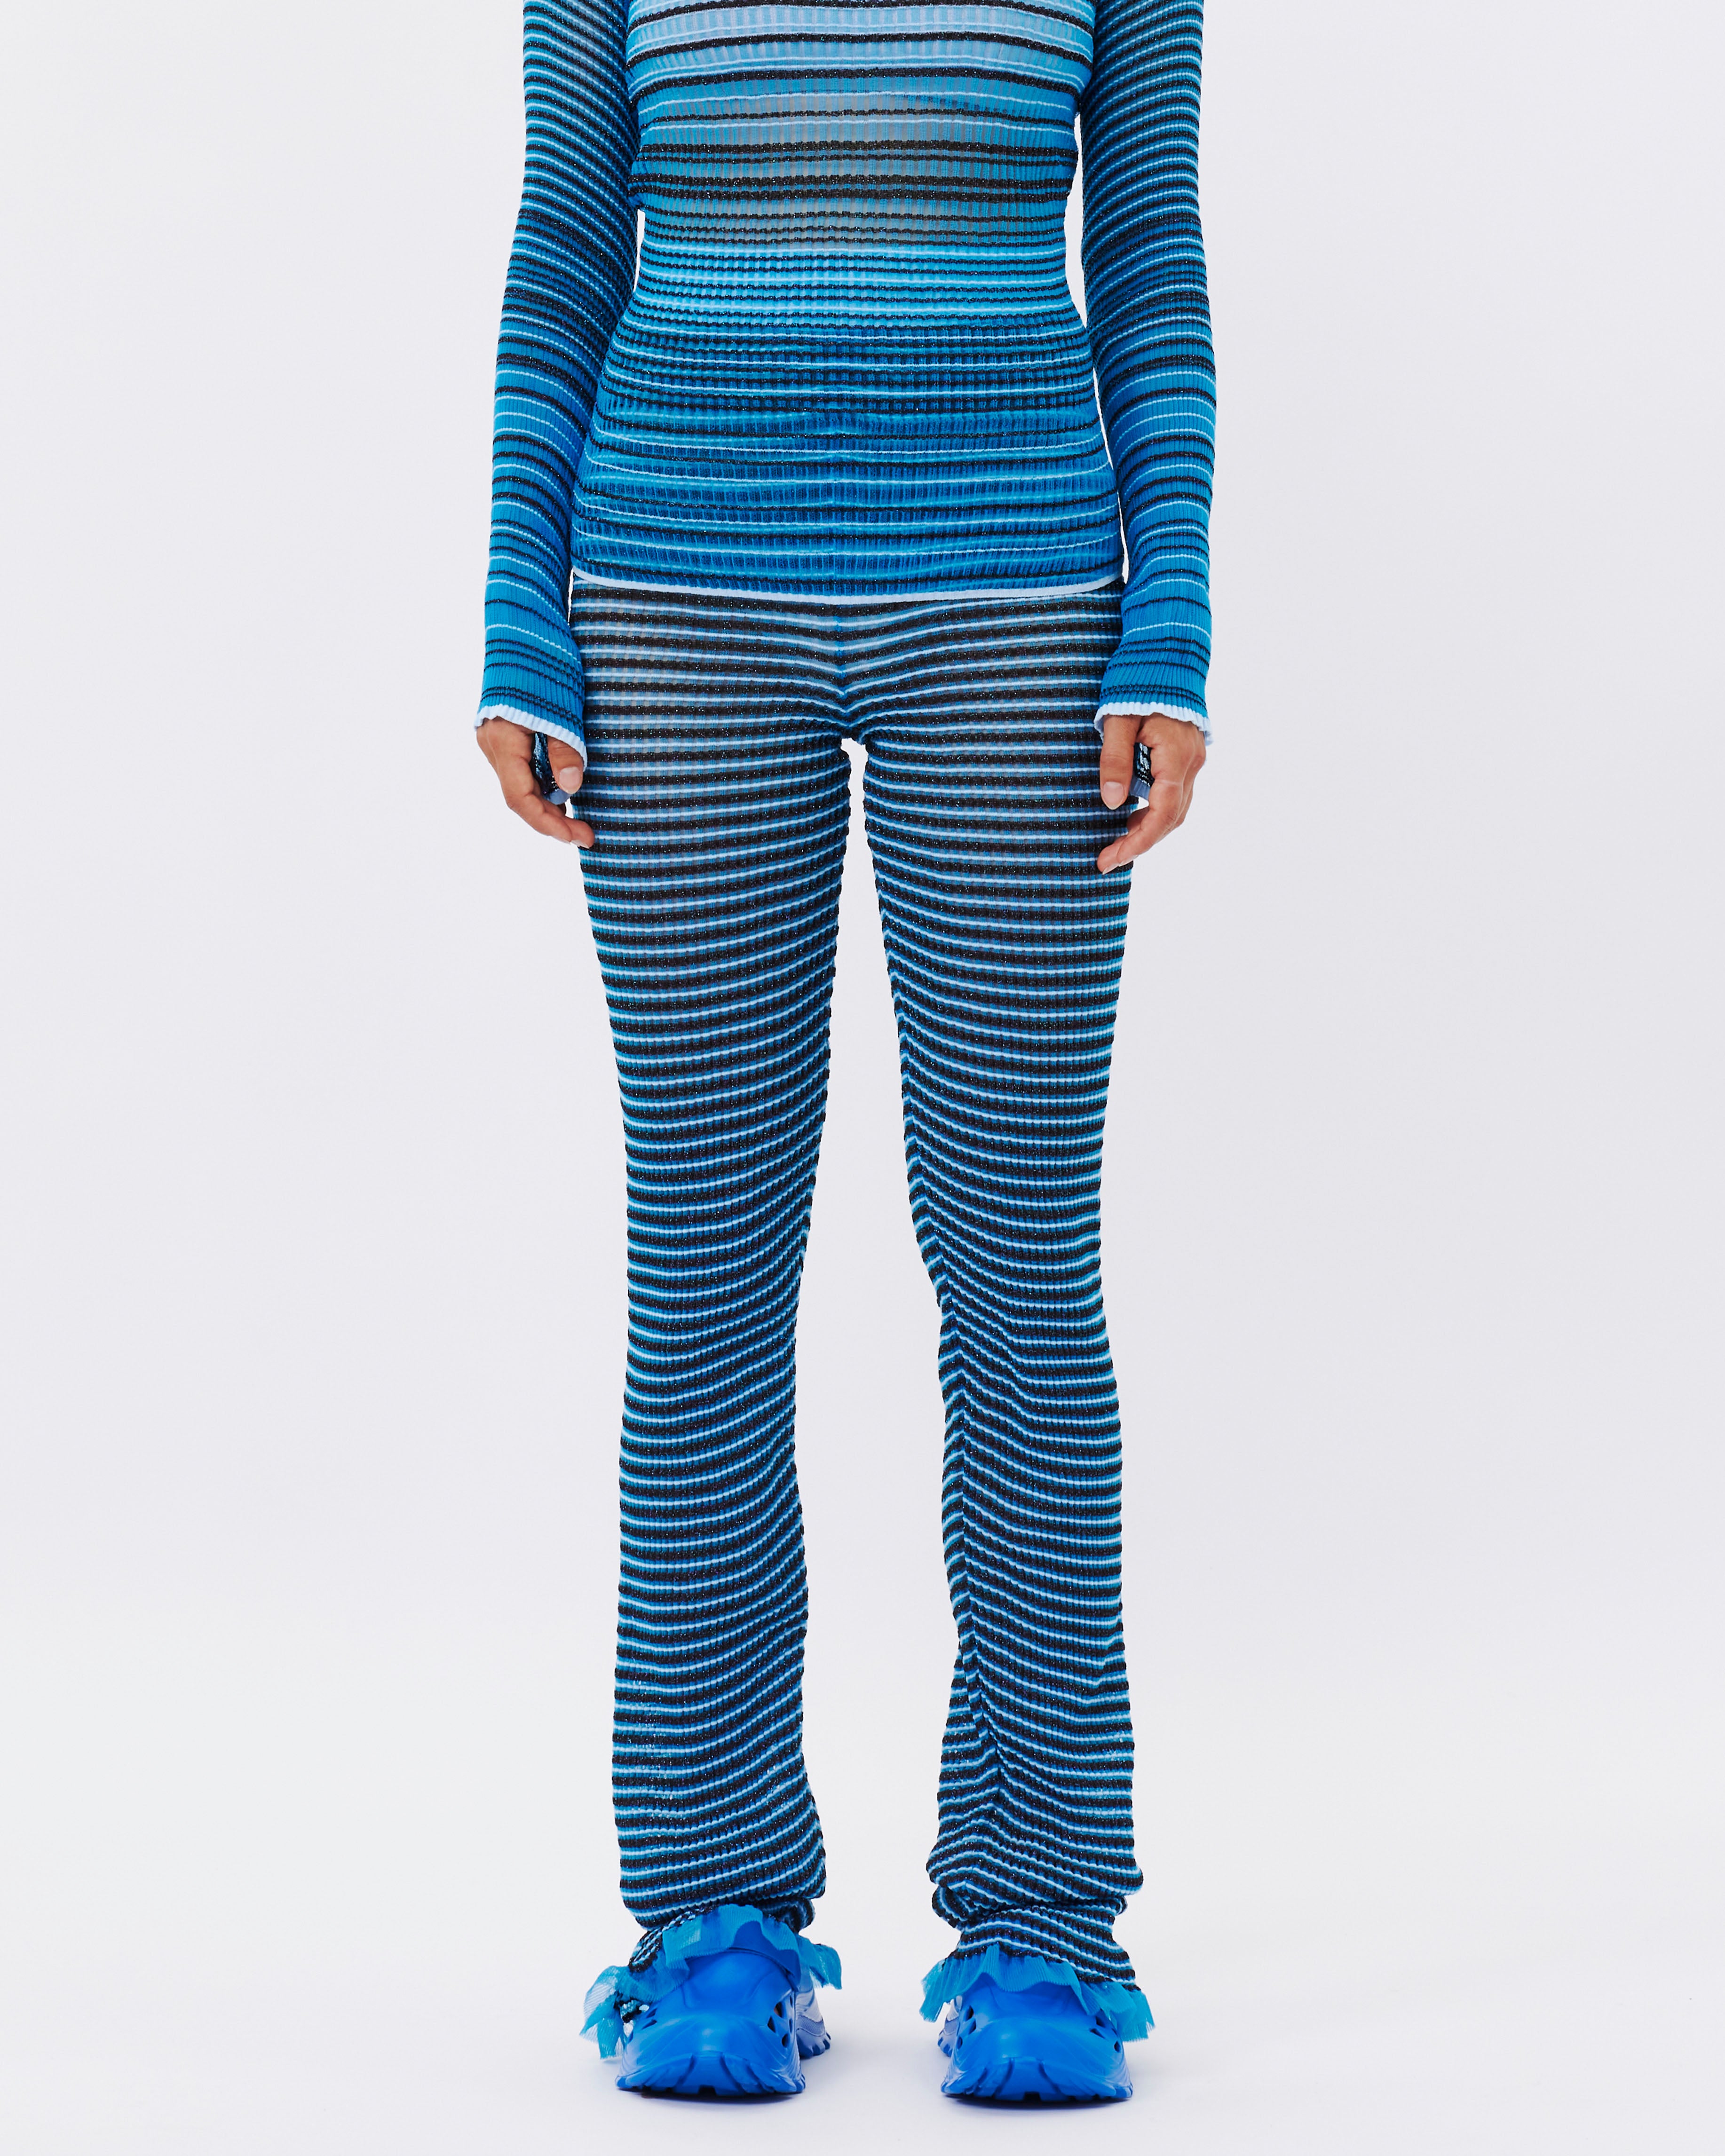 Nadia Wire Secret stripes trouser blue/brown 503-BLU